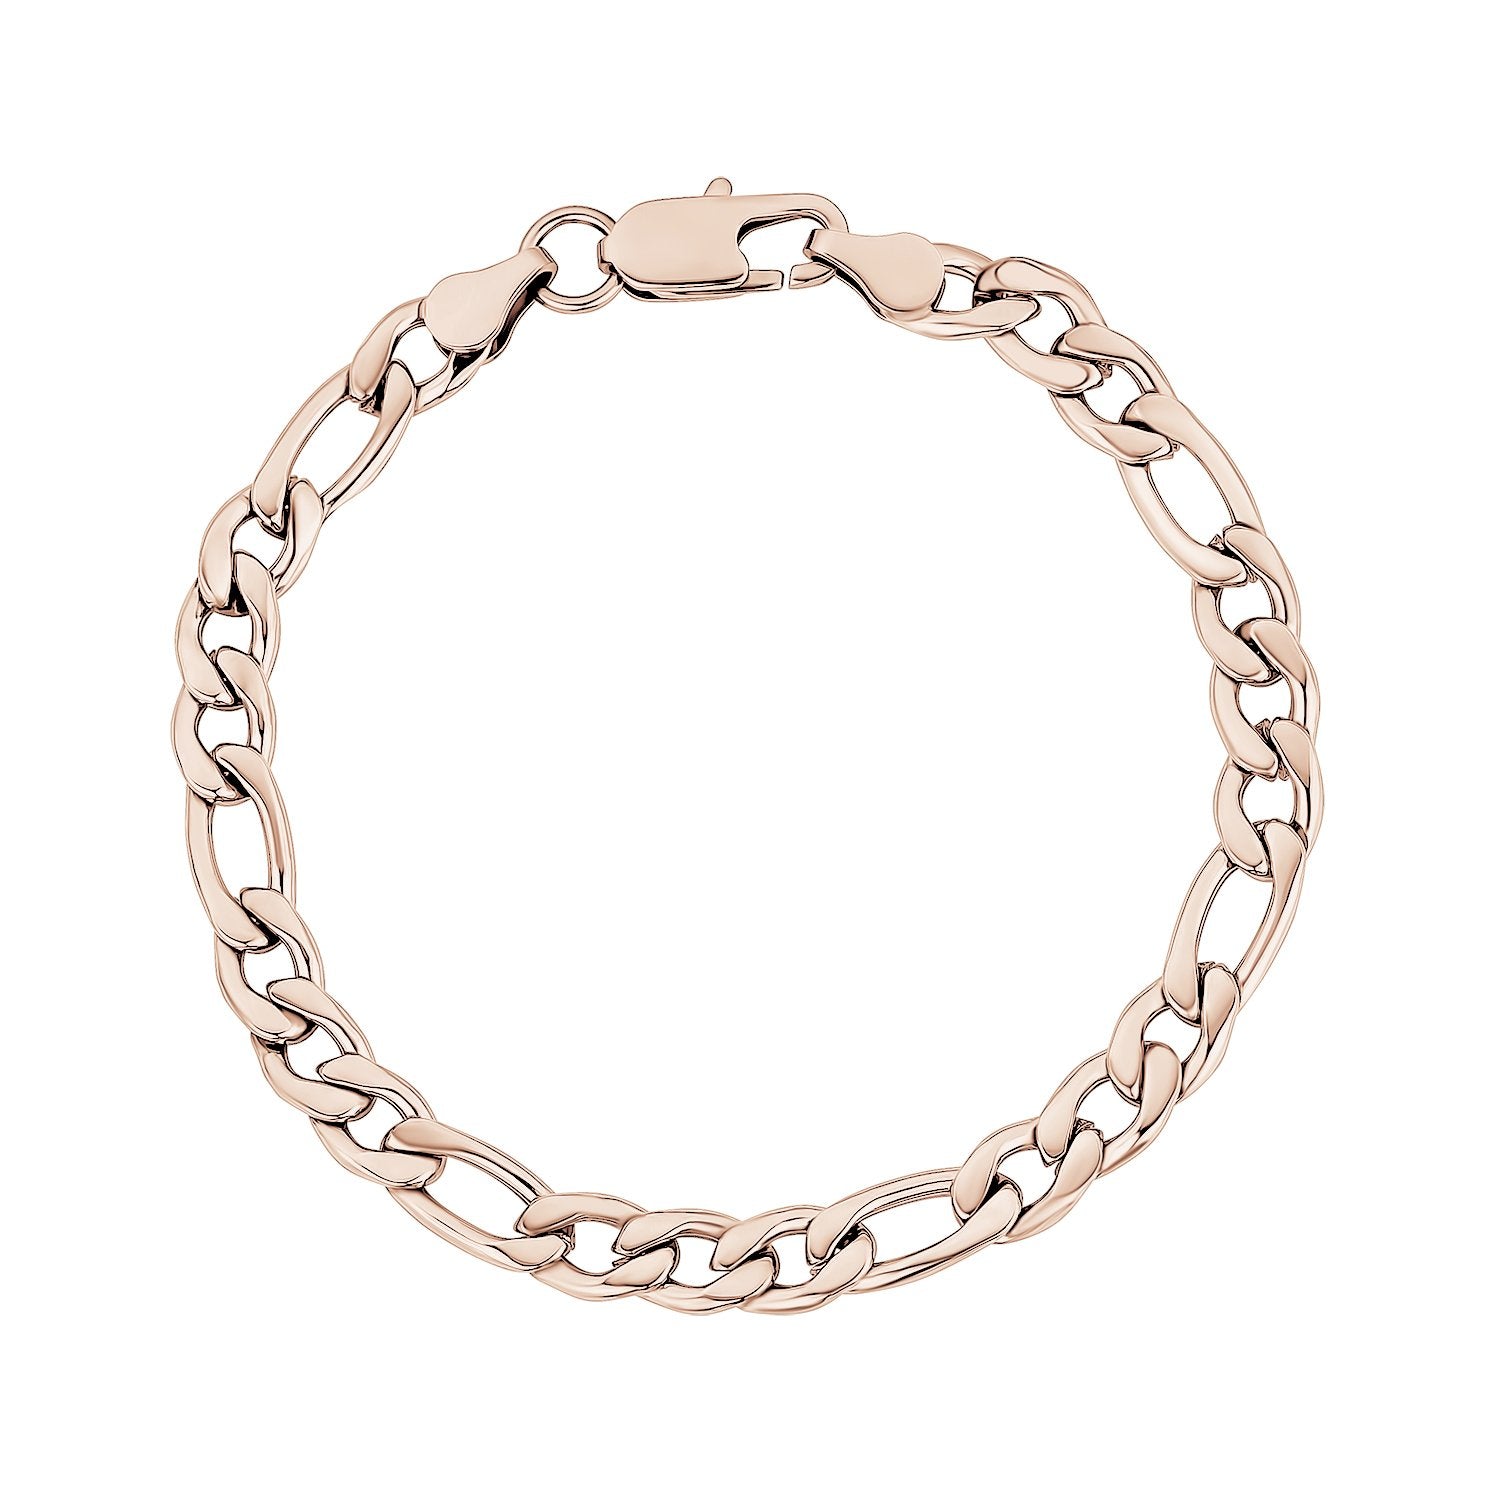 Bracelets for Women: Shop Charm, Silver & Leather Womens Bracelets - Fossil